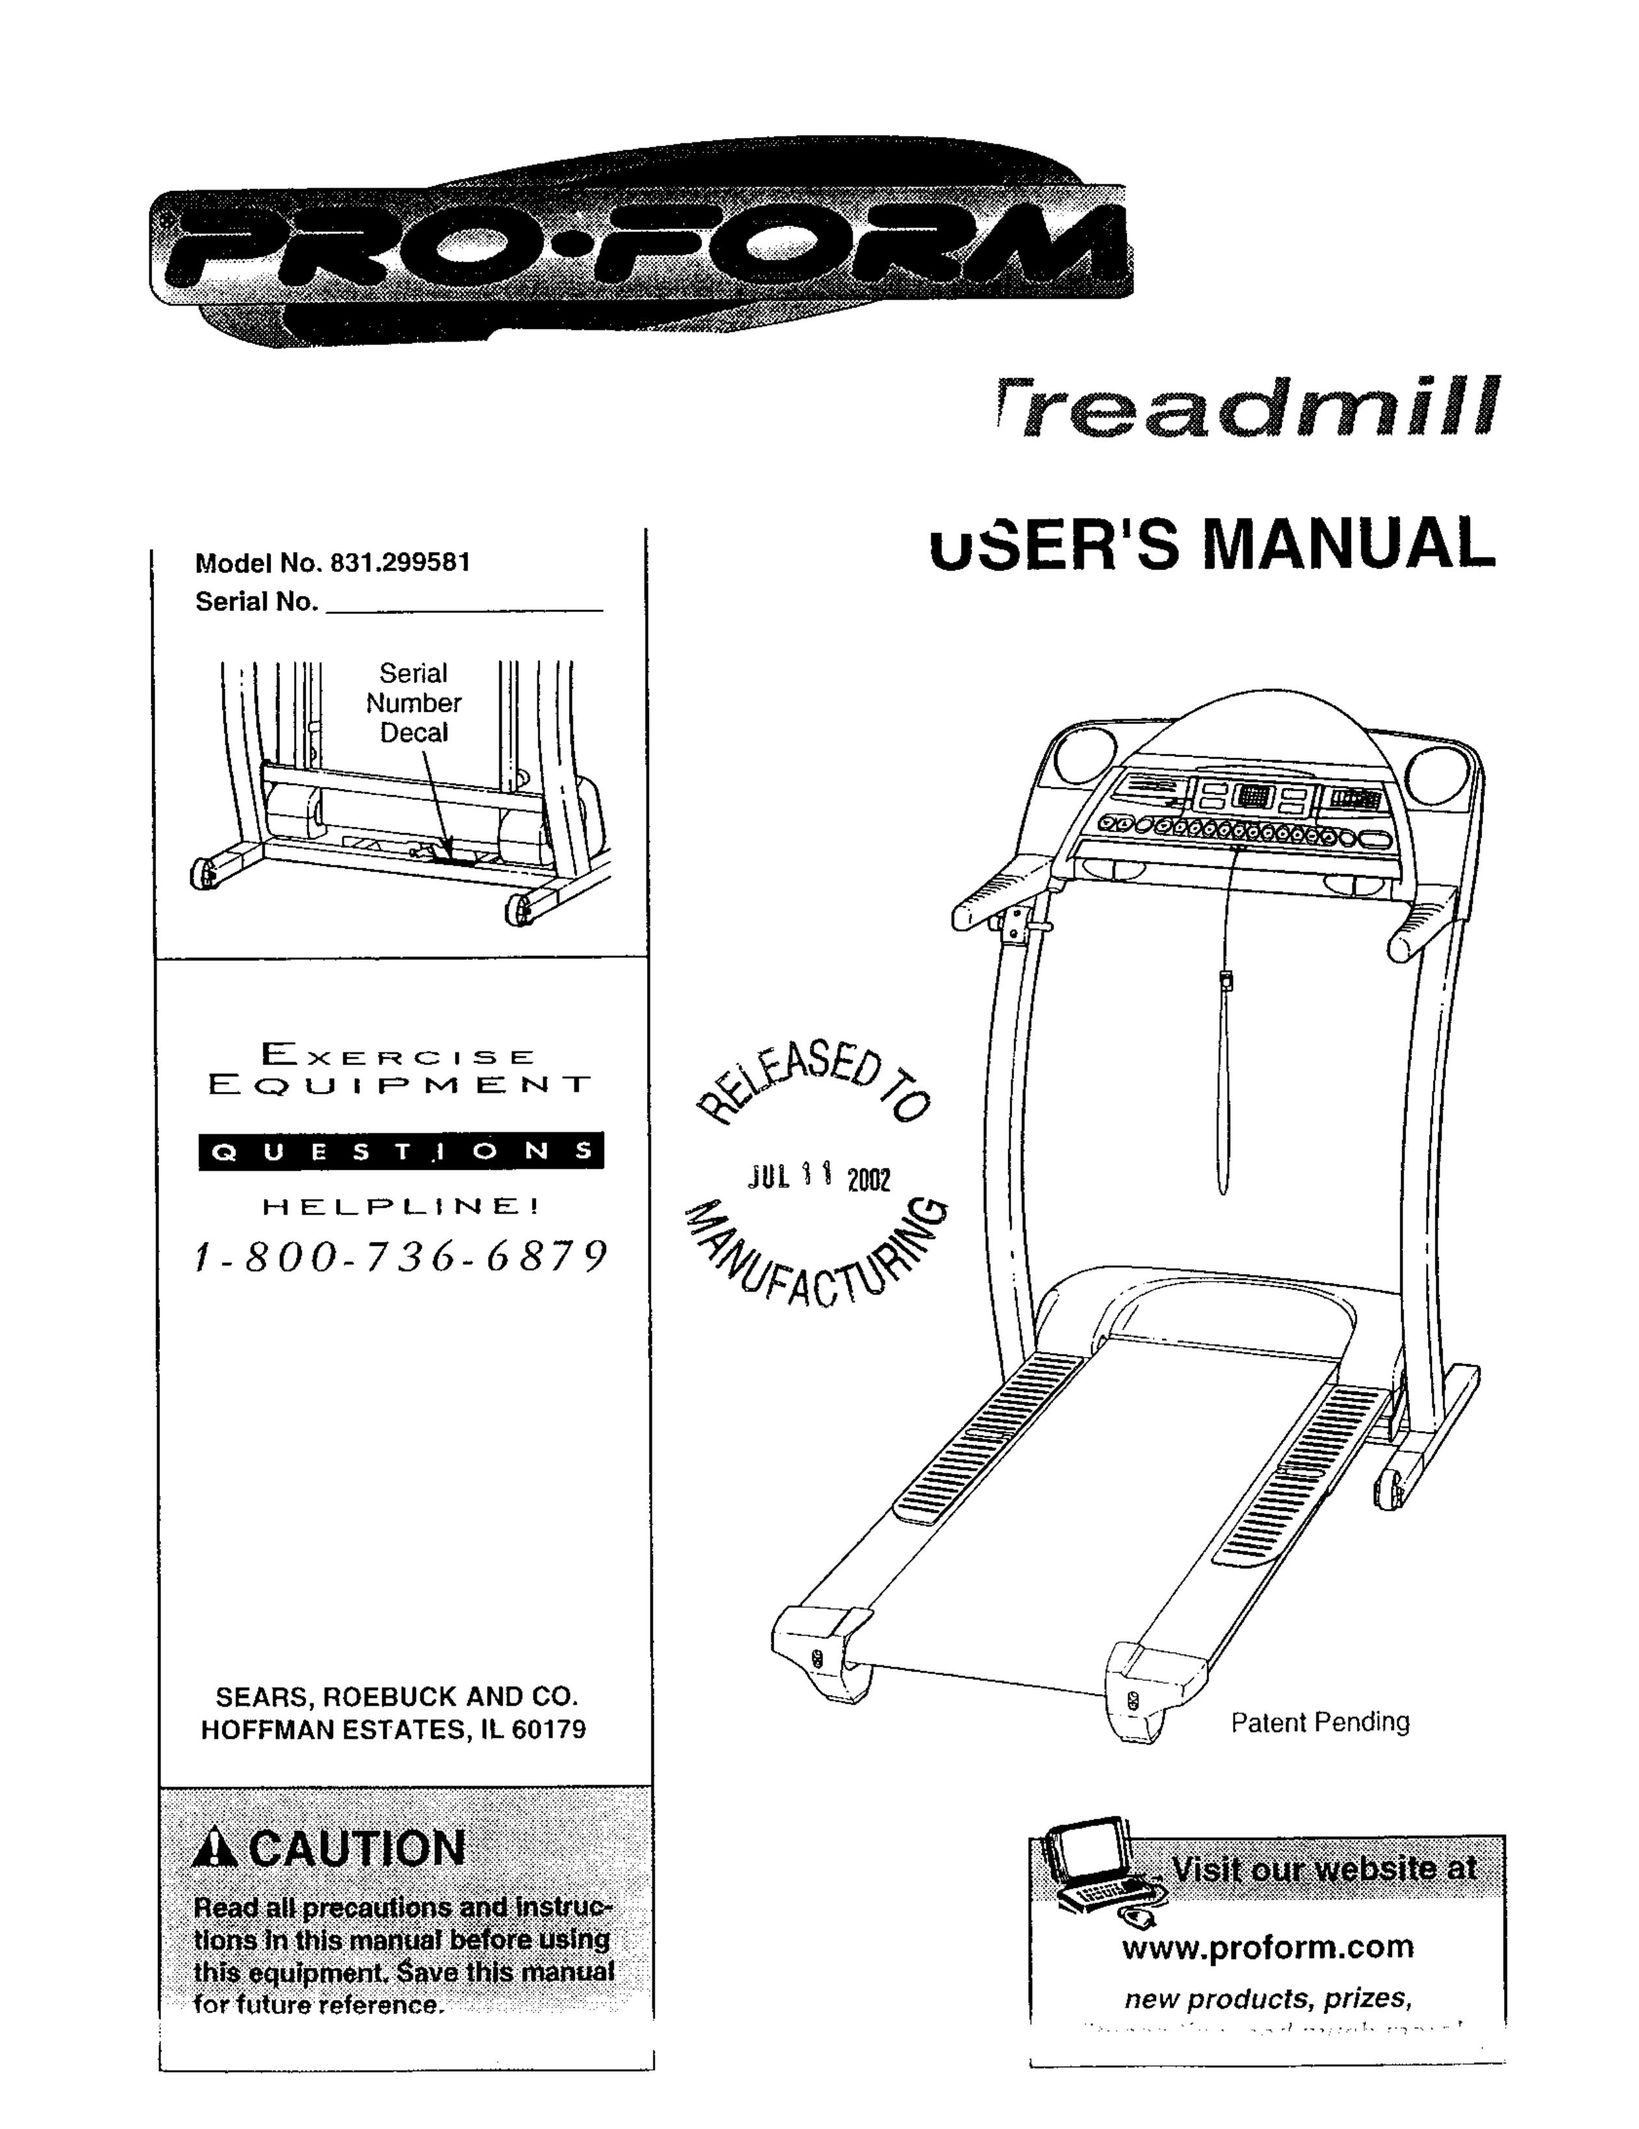 Sears 831.299581 Treadmill User Manual